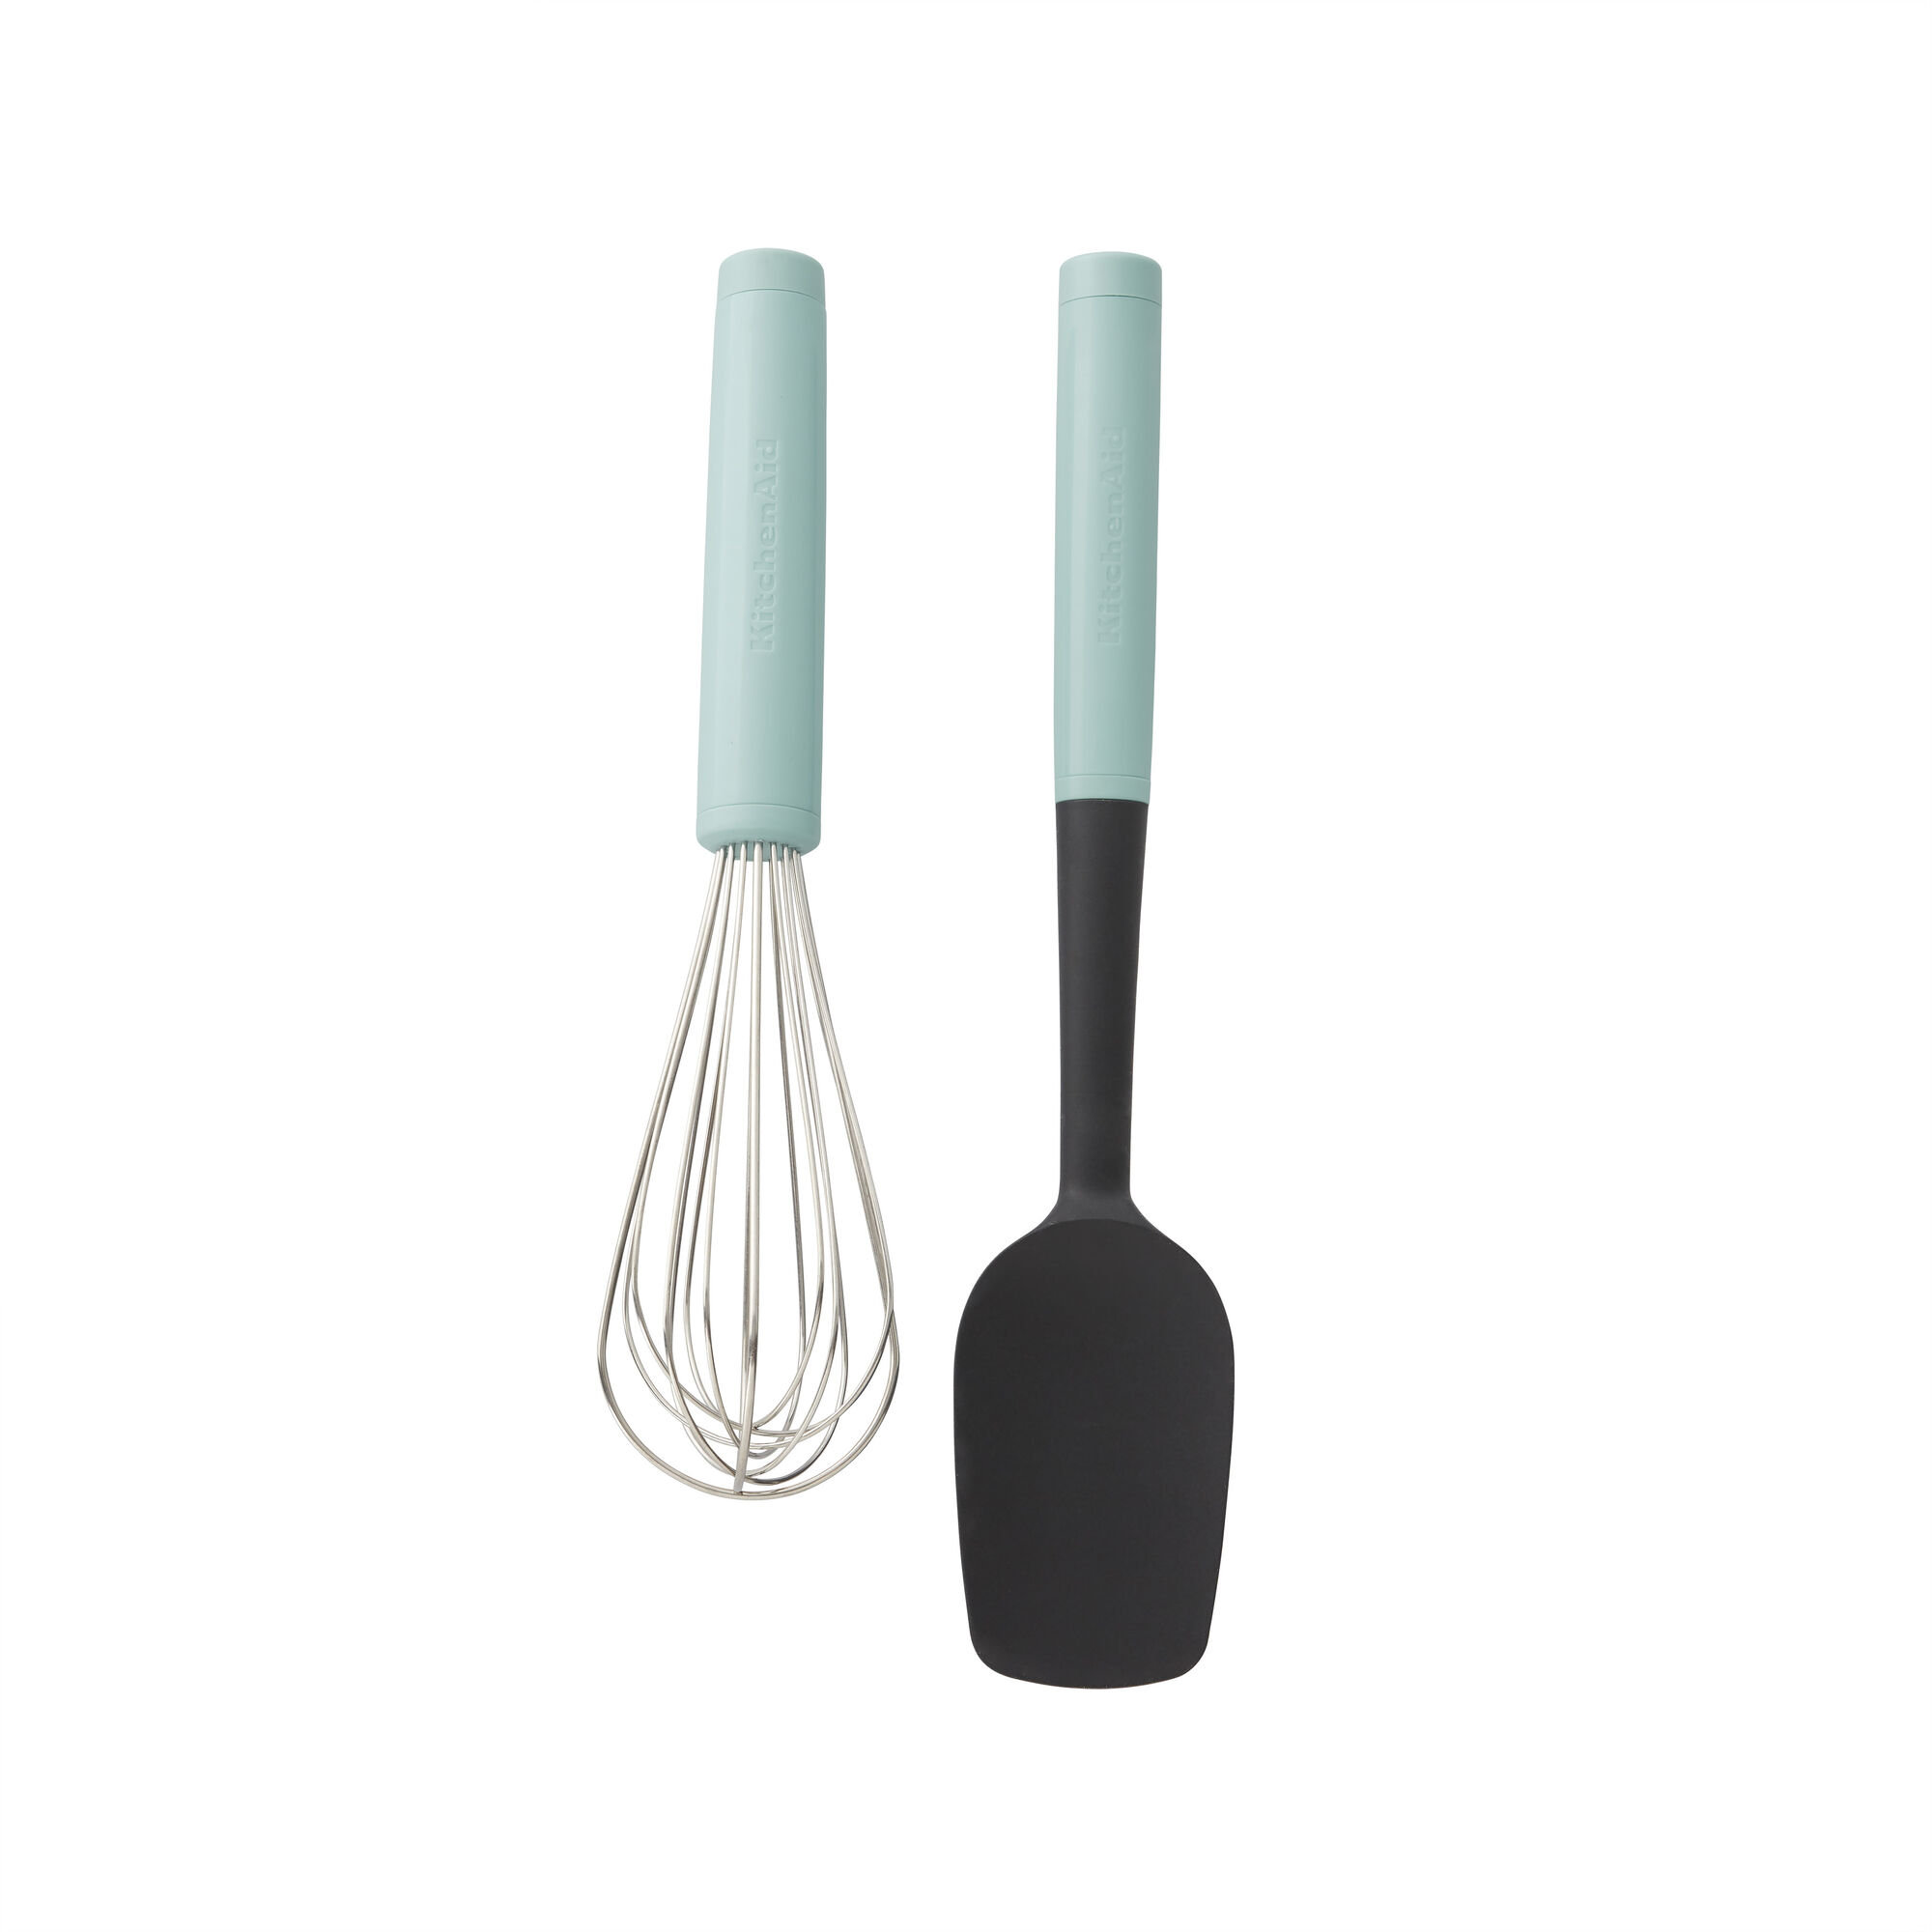 KitchenAid Basting Spoon, 13.5 Inches, Aqua